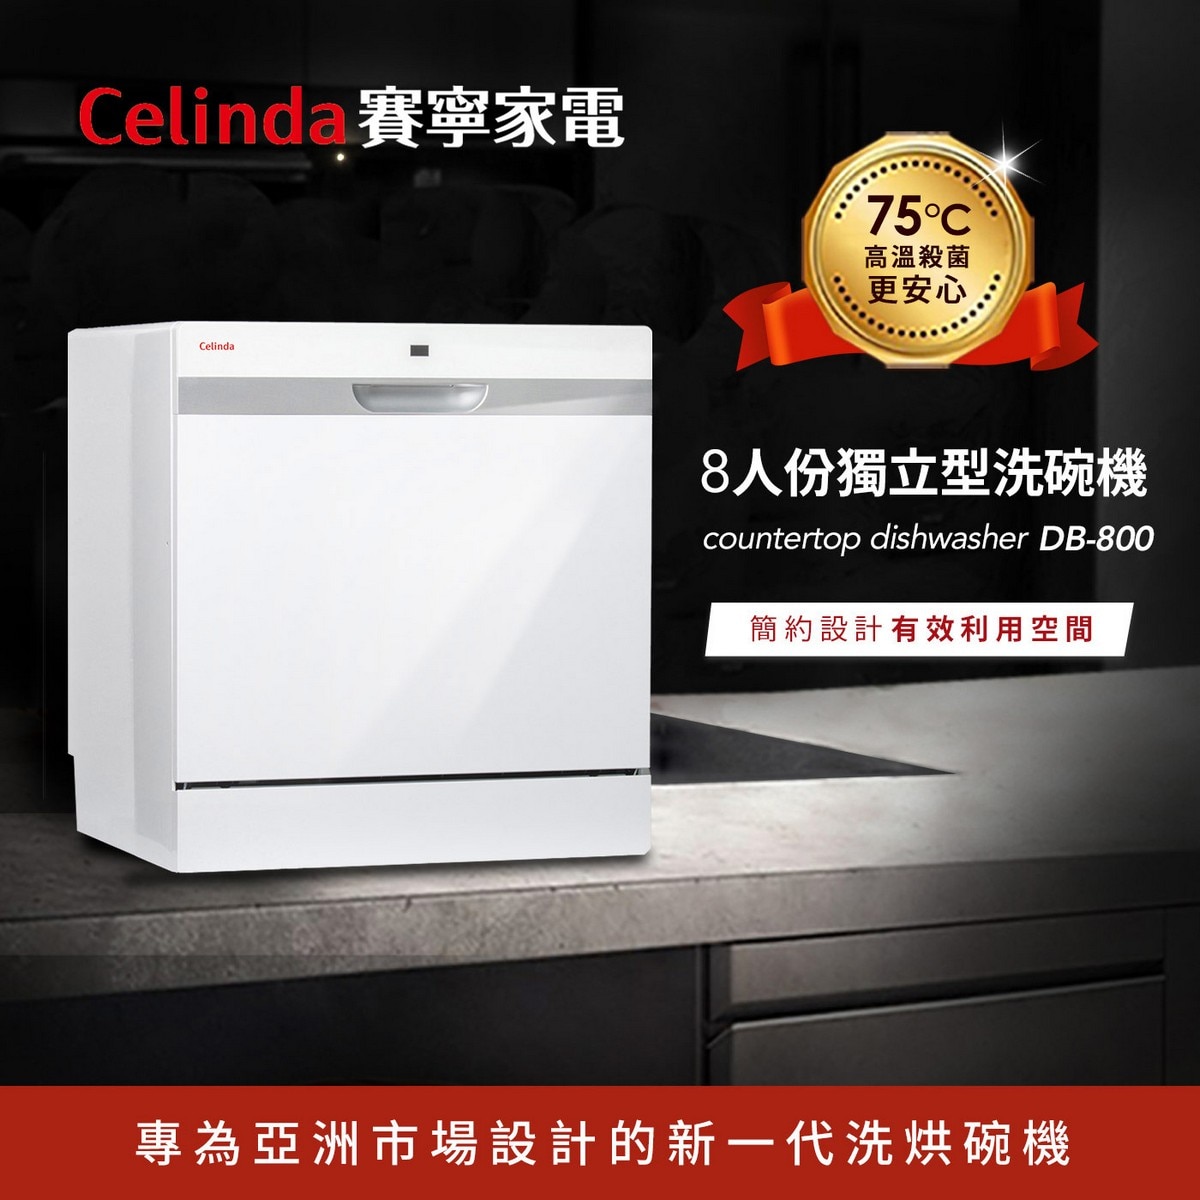 Celinda 8人份獨立式洗碗機 簡約設計 有效利用空間